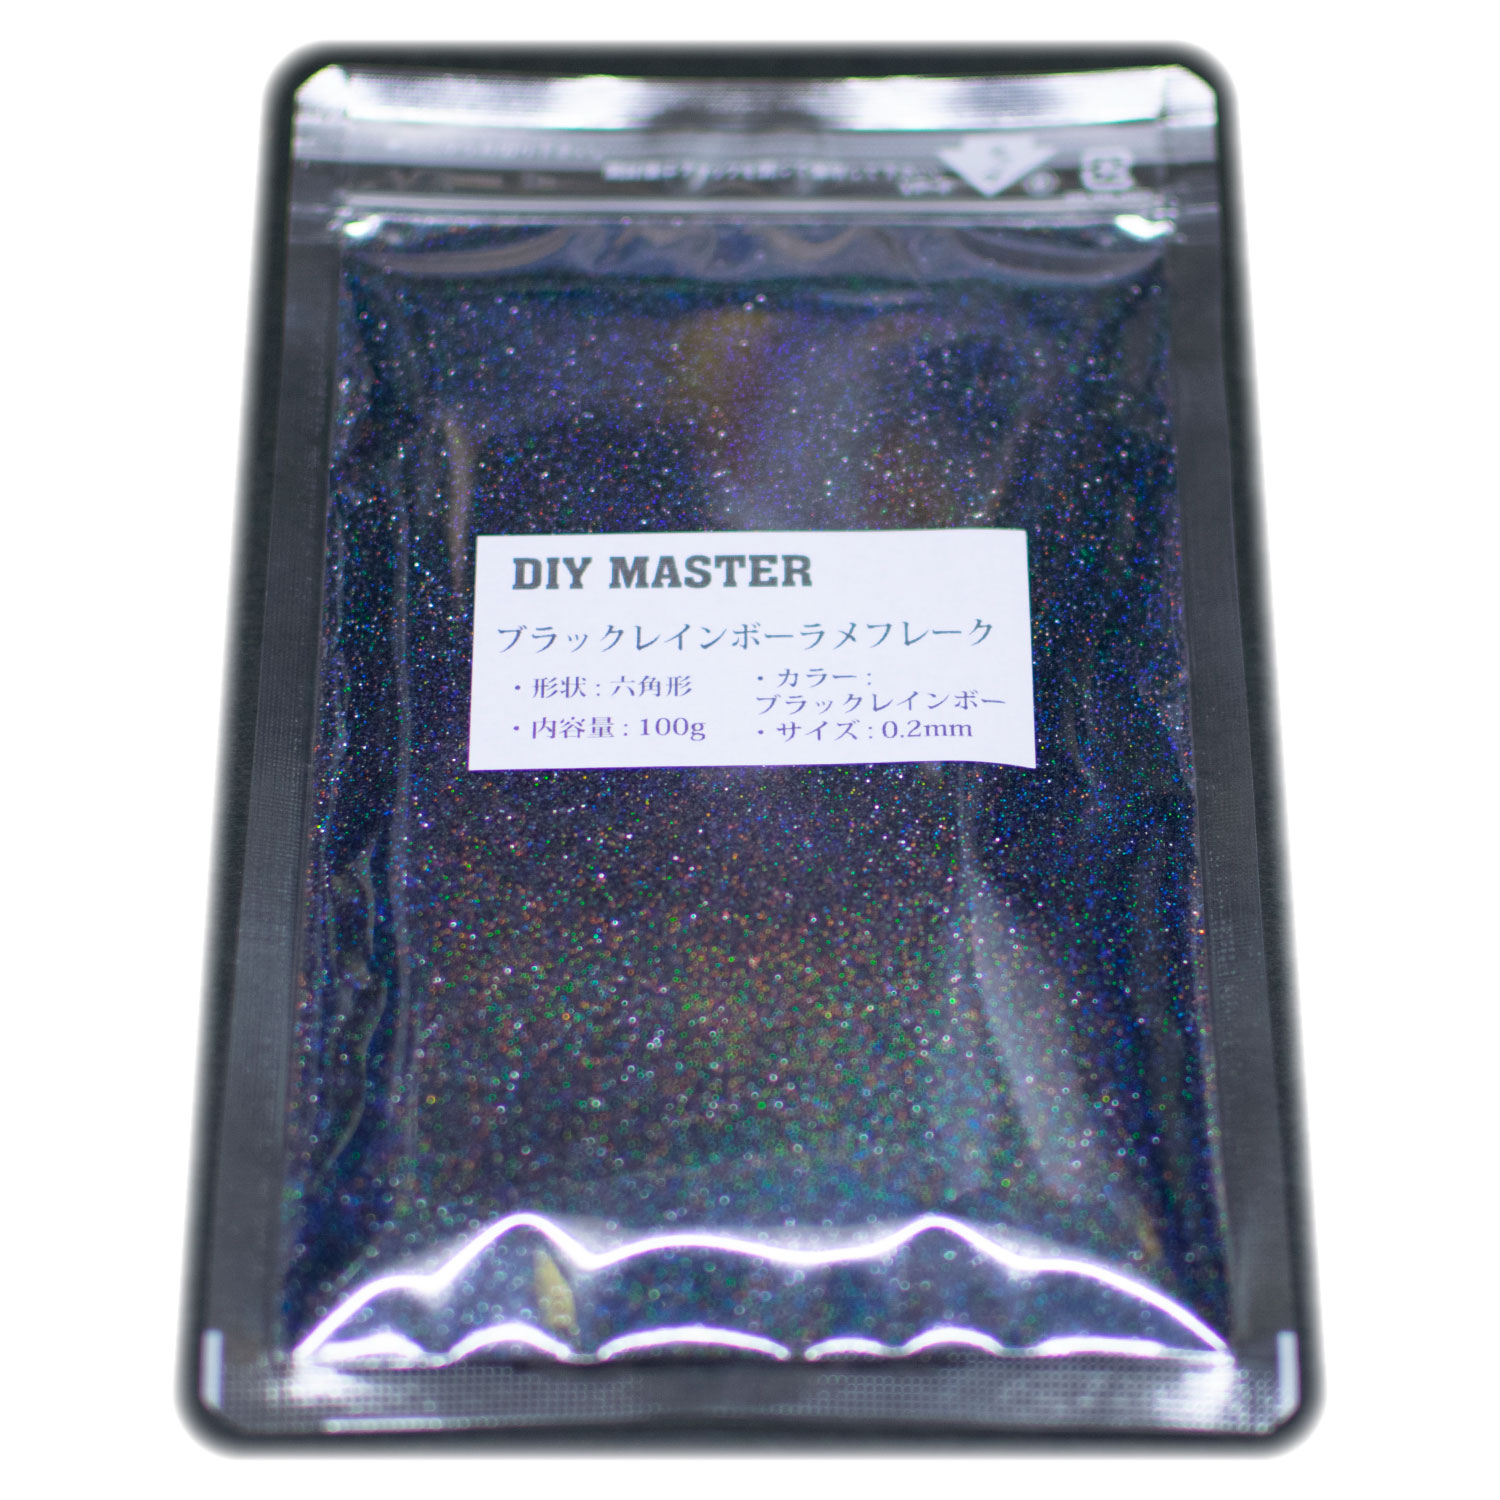 DIY MASTER シルバー ラメフレーク ロング 0.2mmx1.5mm (小) 250g (検